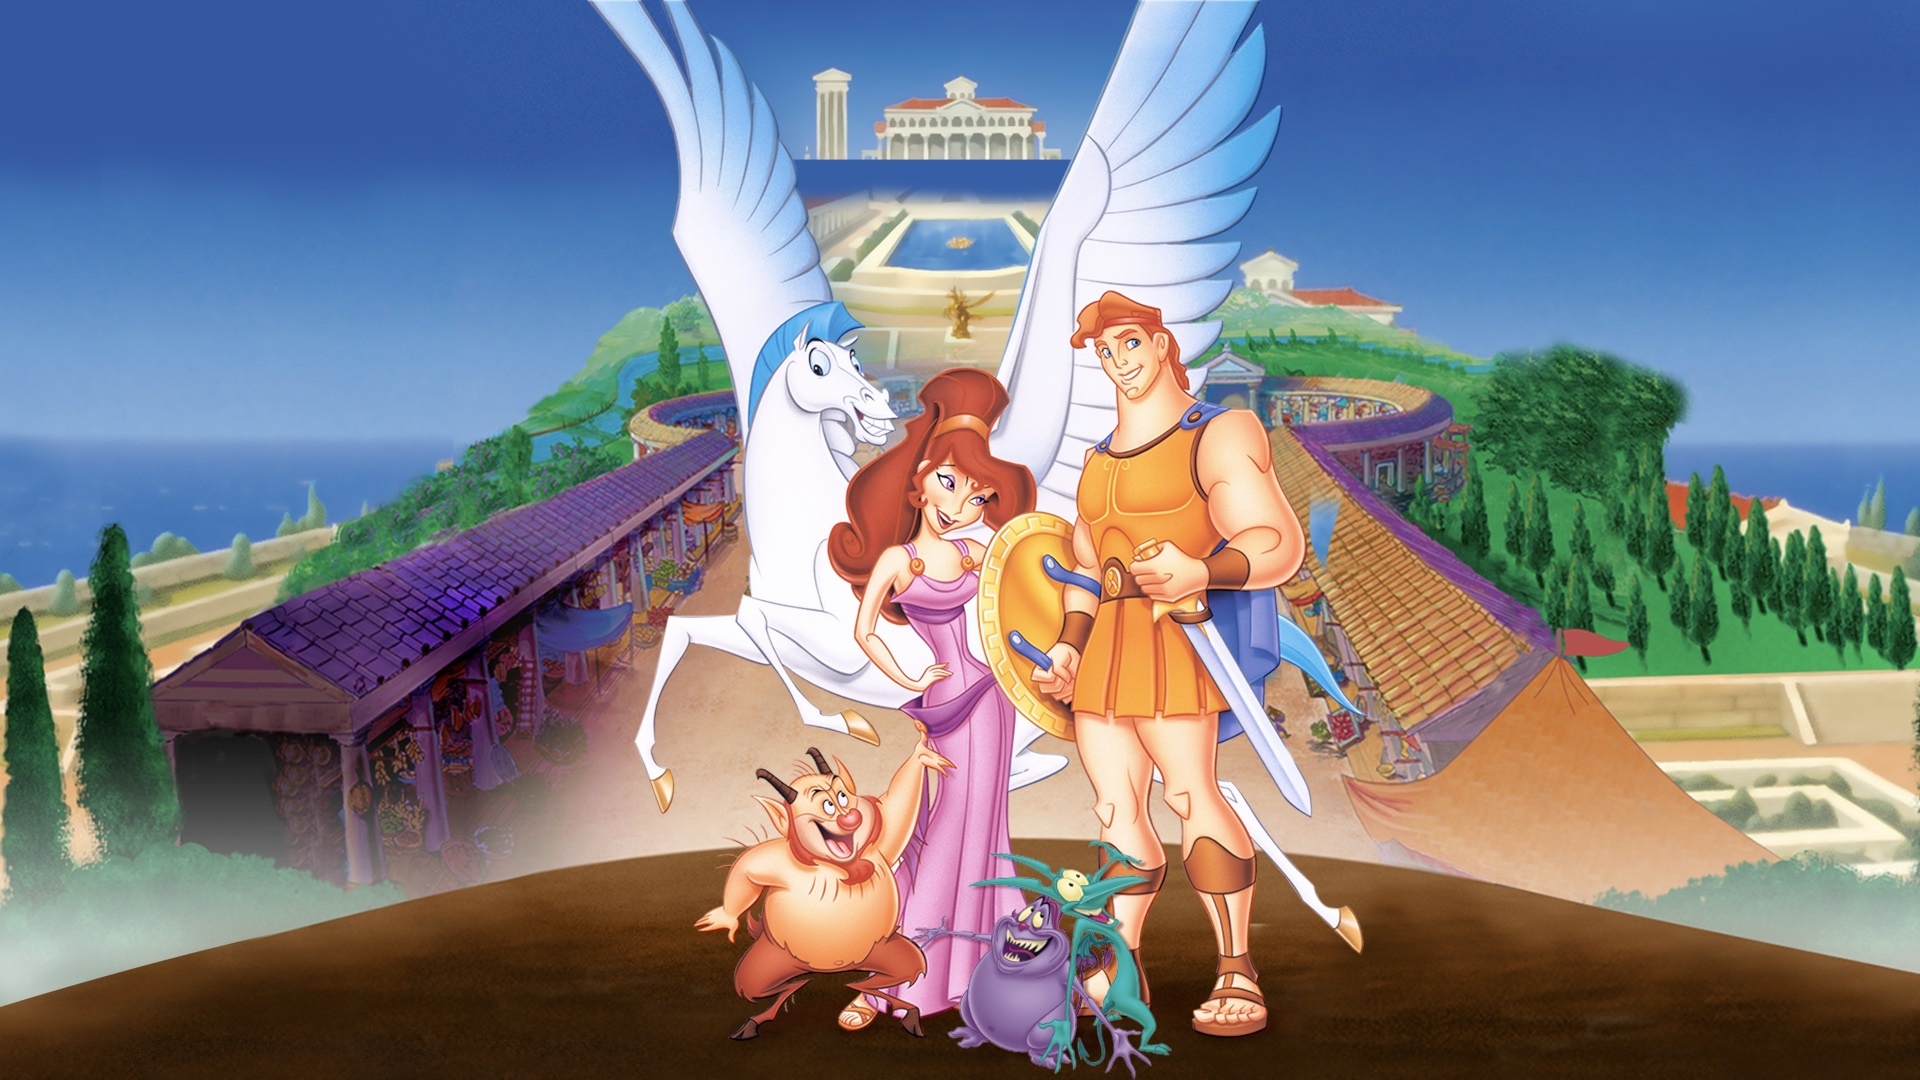 Hercules movie fanart, Disney animation, Heroic adventures, Mythical creatures, 1920x1080 Full HD Desktop